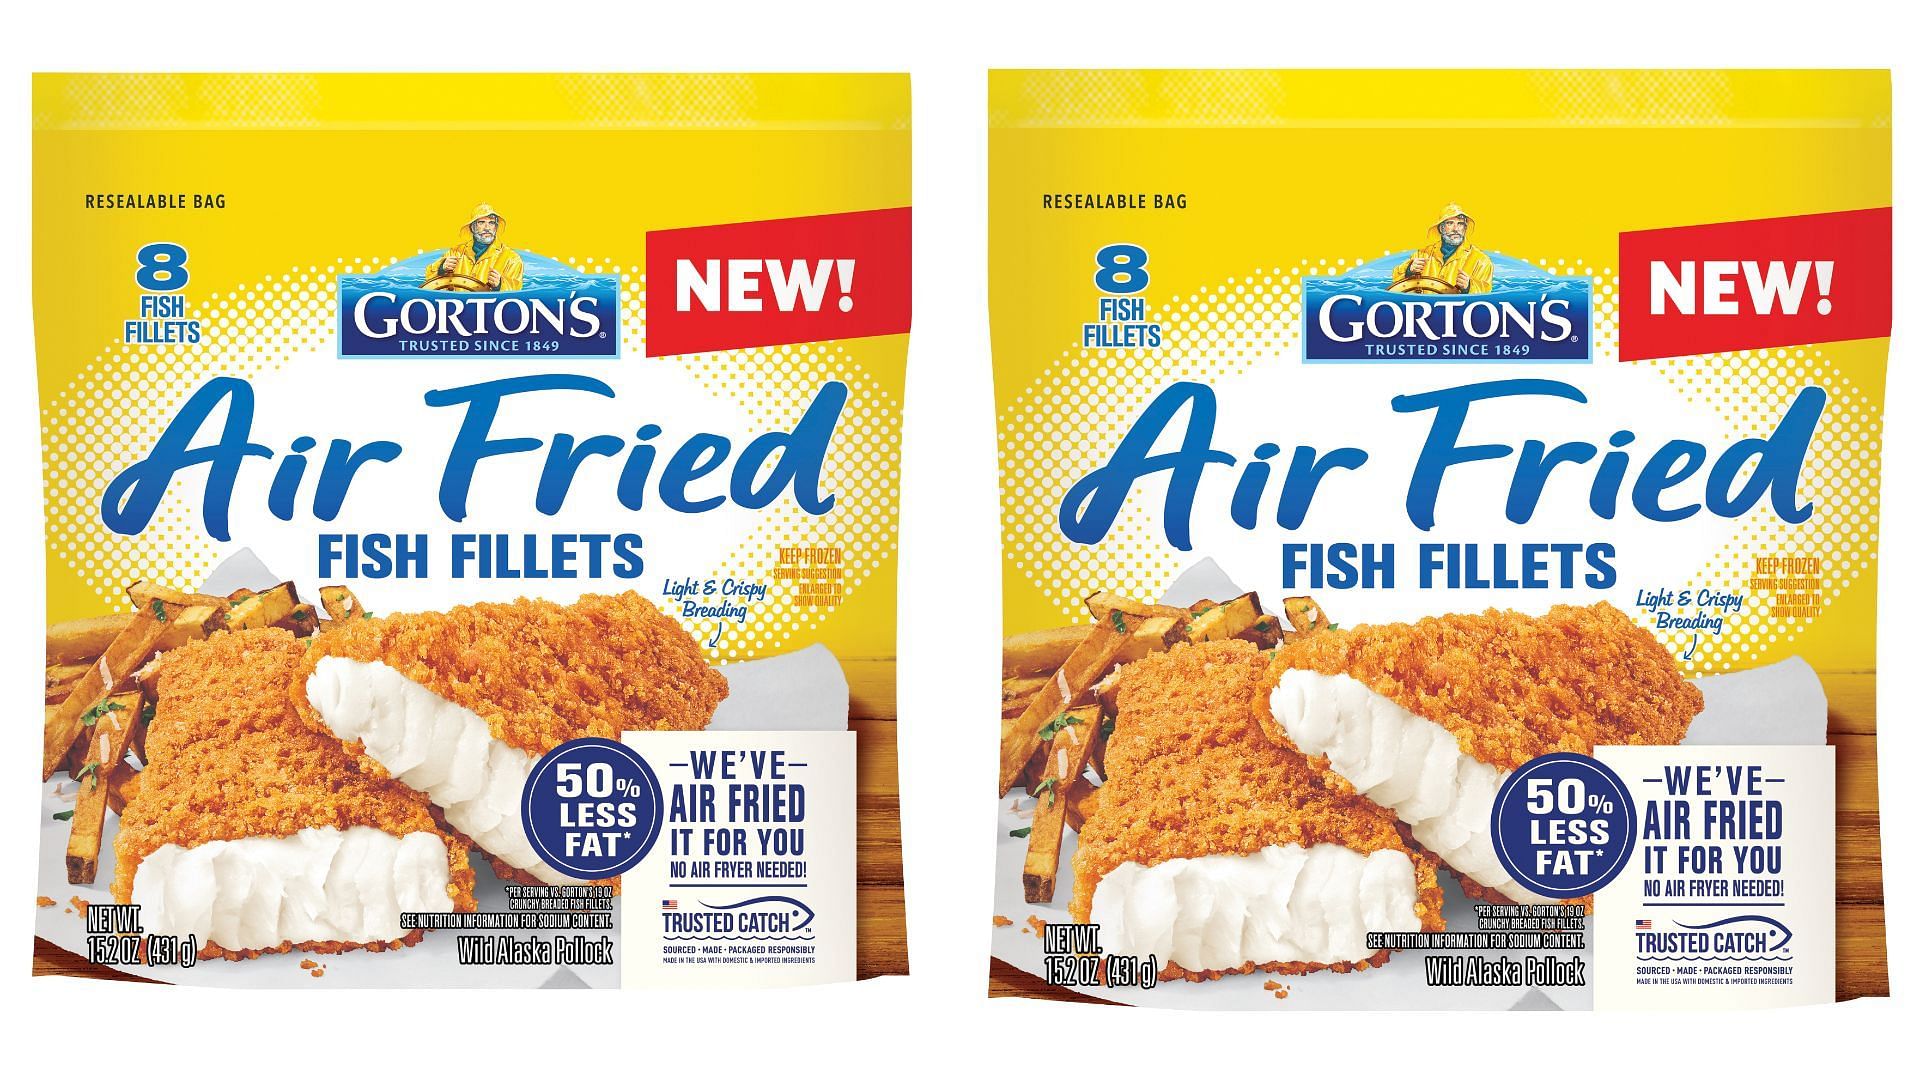 Gorton&rsquo;s Air Fried Fish Filets have 50% less fat (Image via Gorton&rsquo;s Seafood)